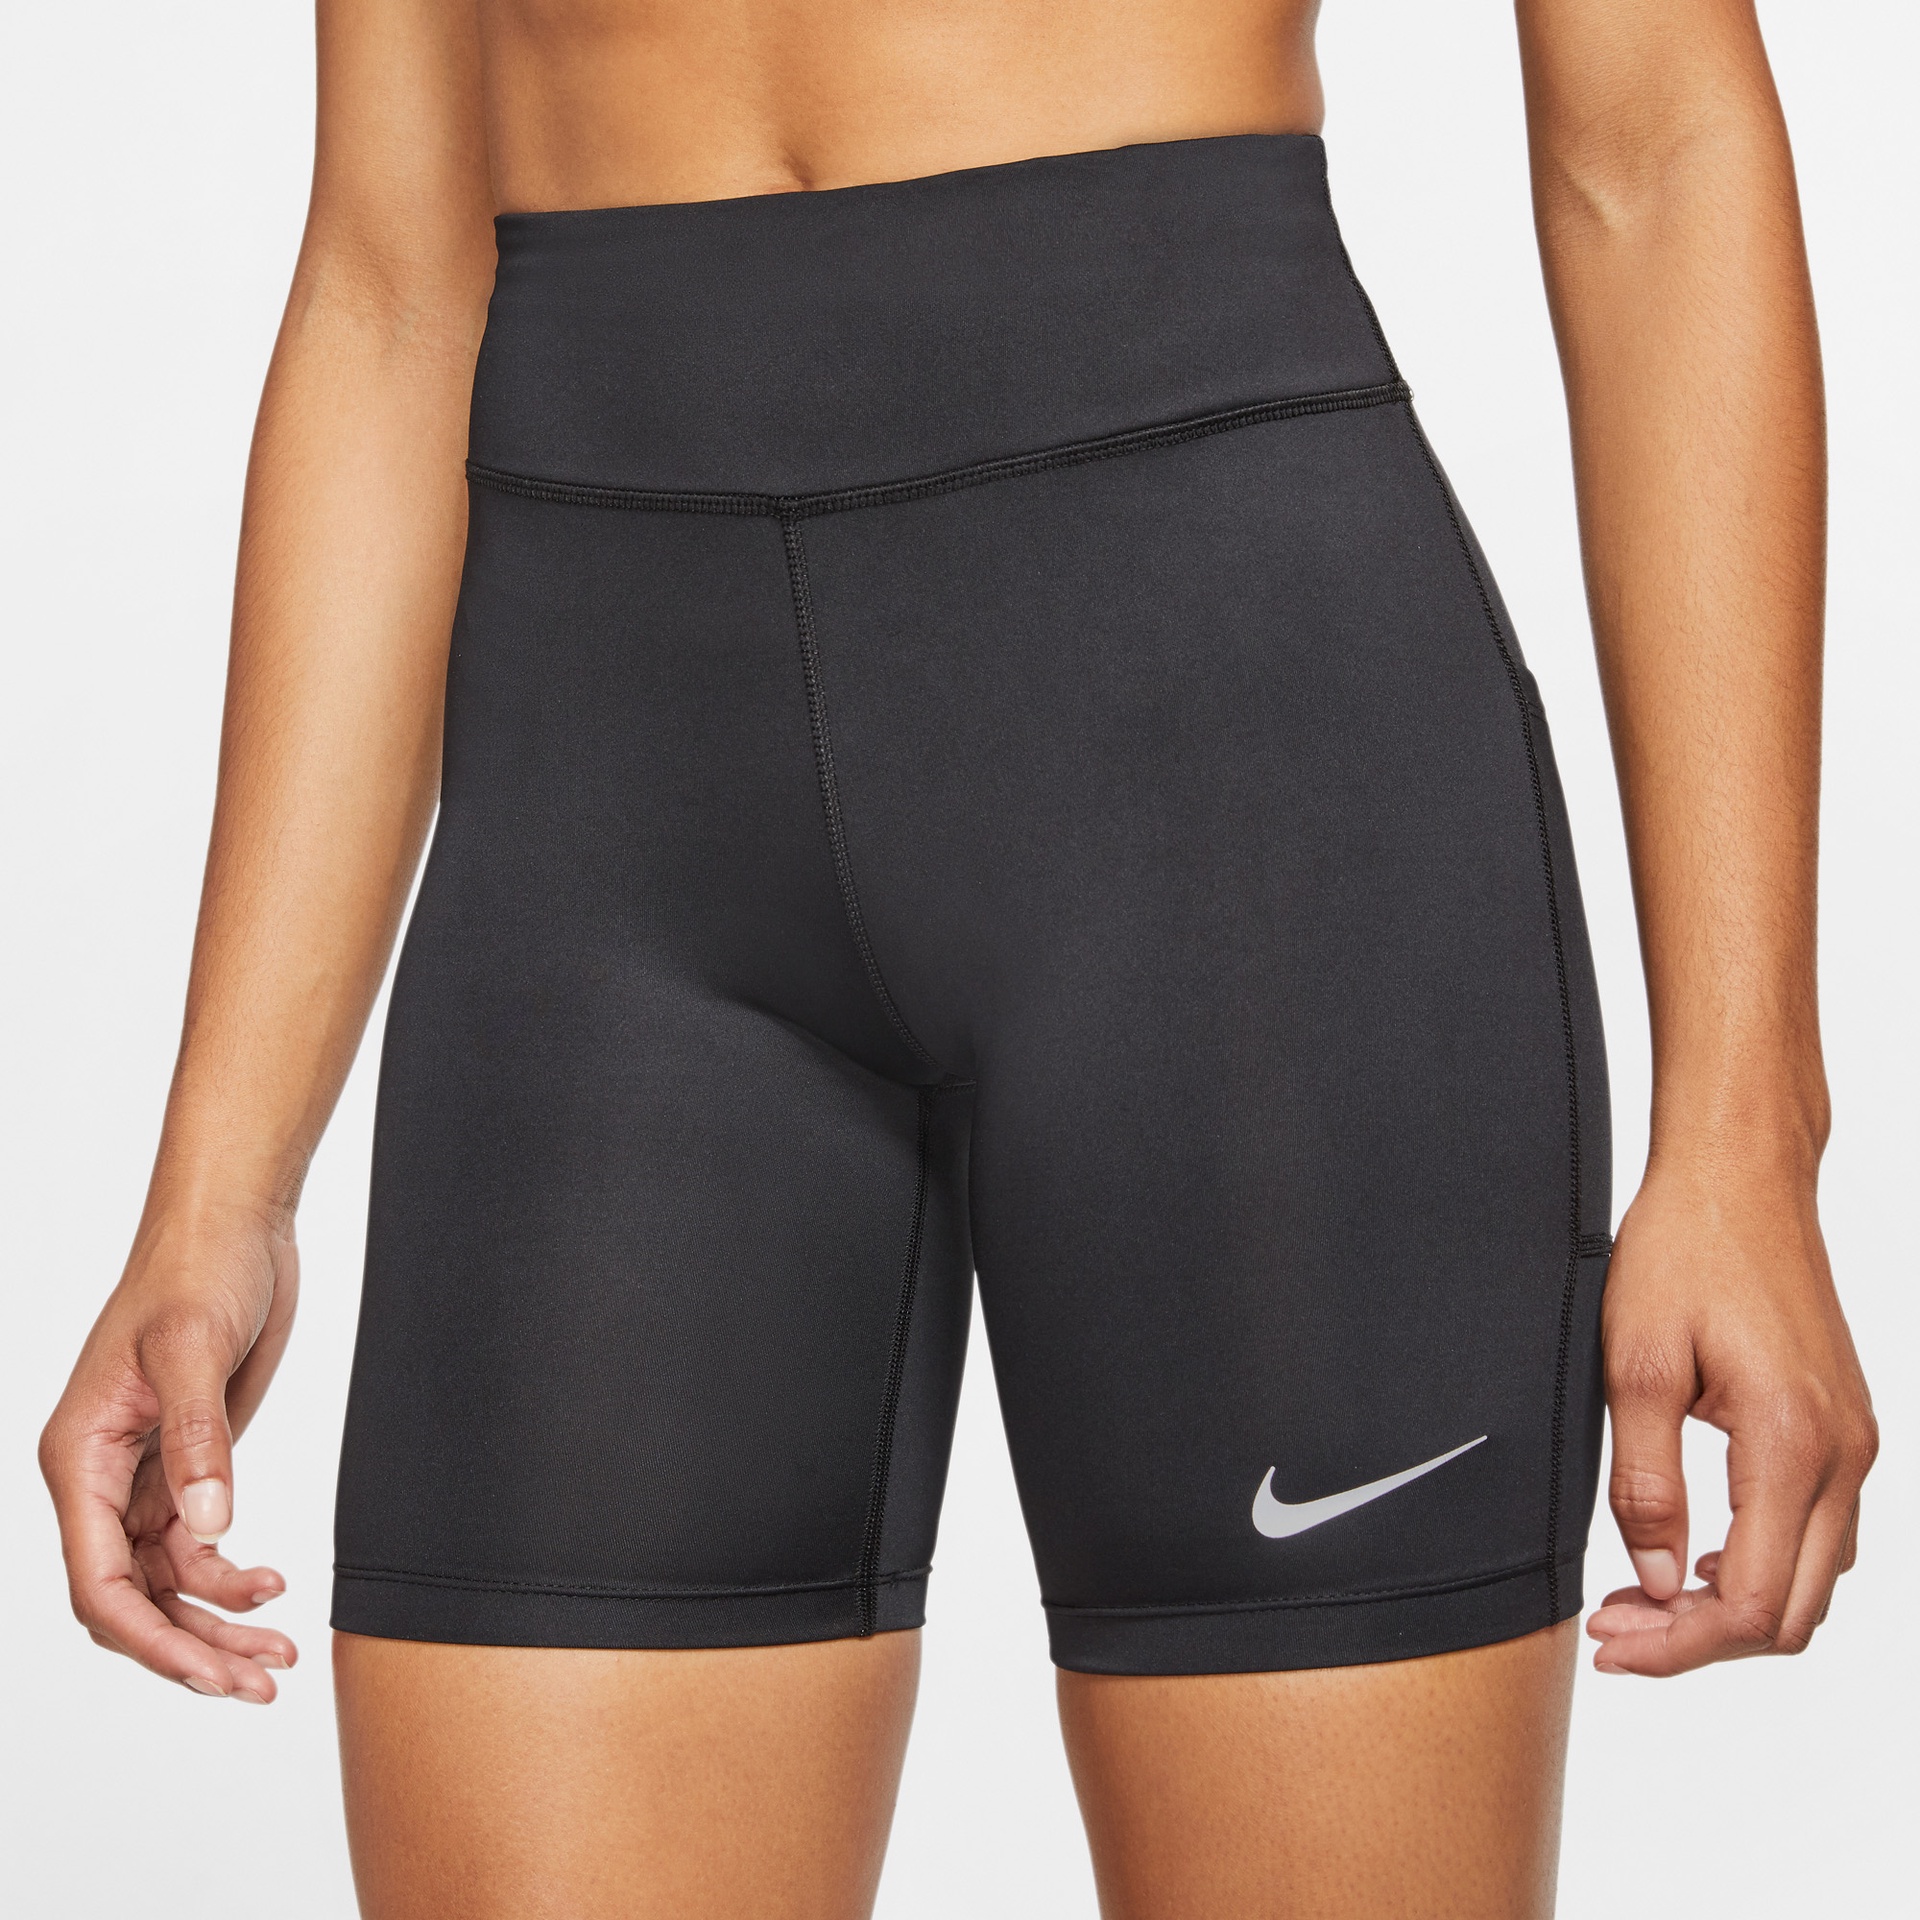 Nike Women’s Fast Shorts – Black/Reflective Silver – Running Bath